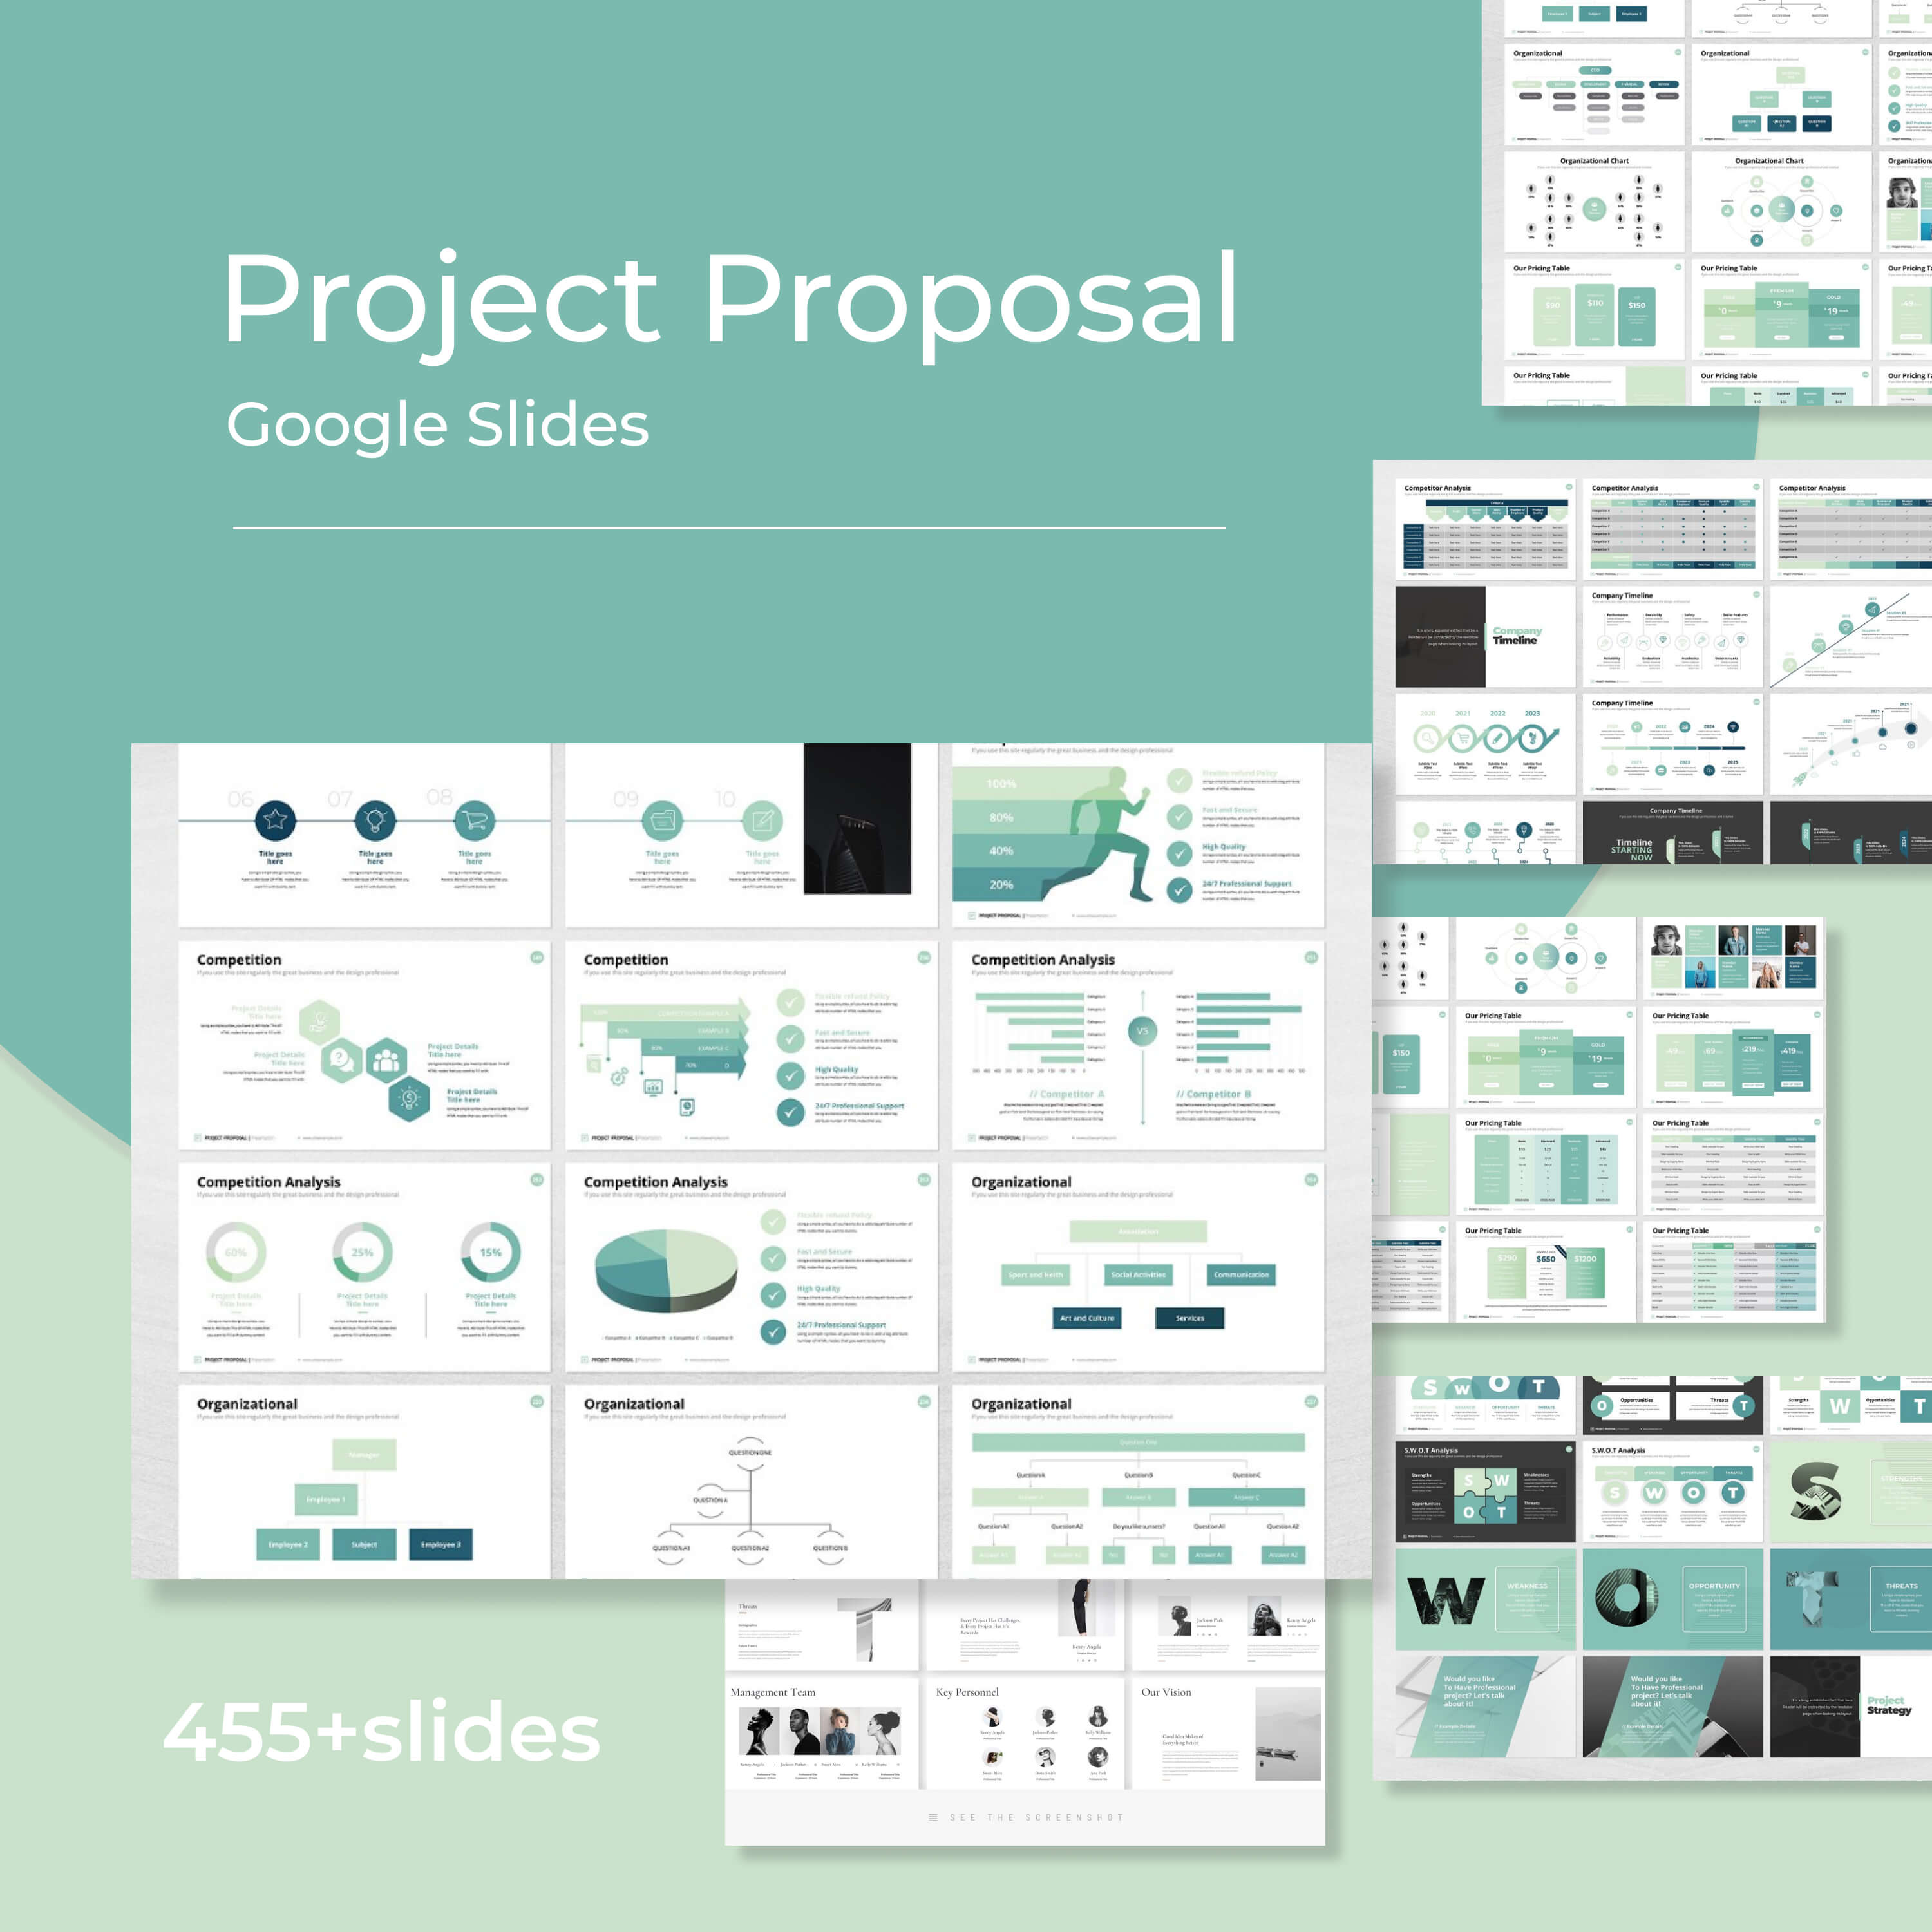 Project proposal google slides.